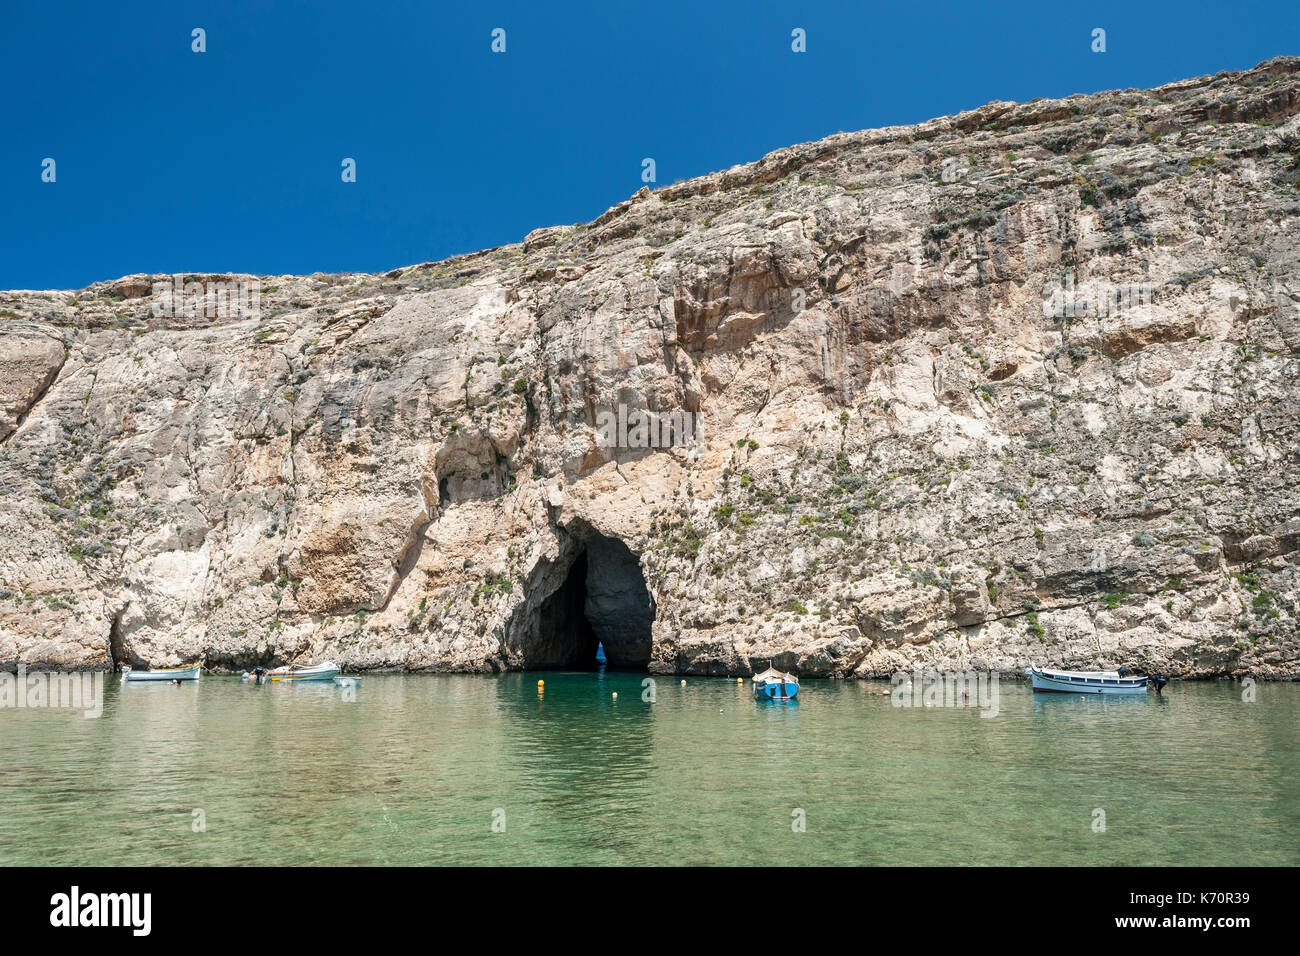 El mar interior (aka Qawra) en la isla de Gozo en Malta. Foto de stock